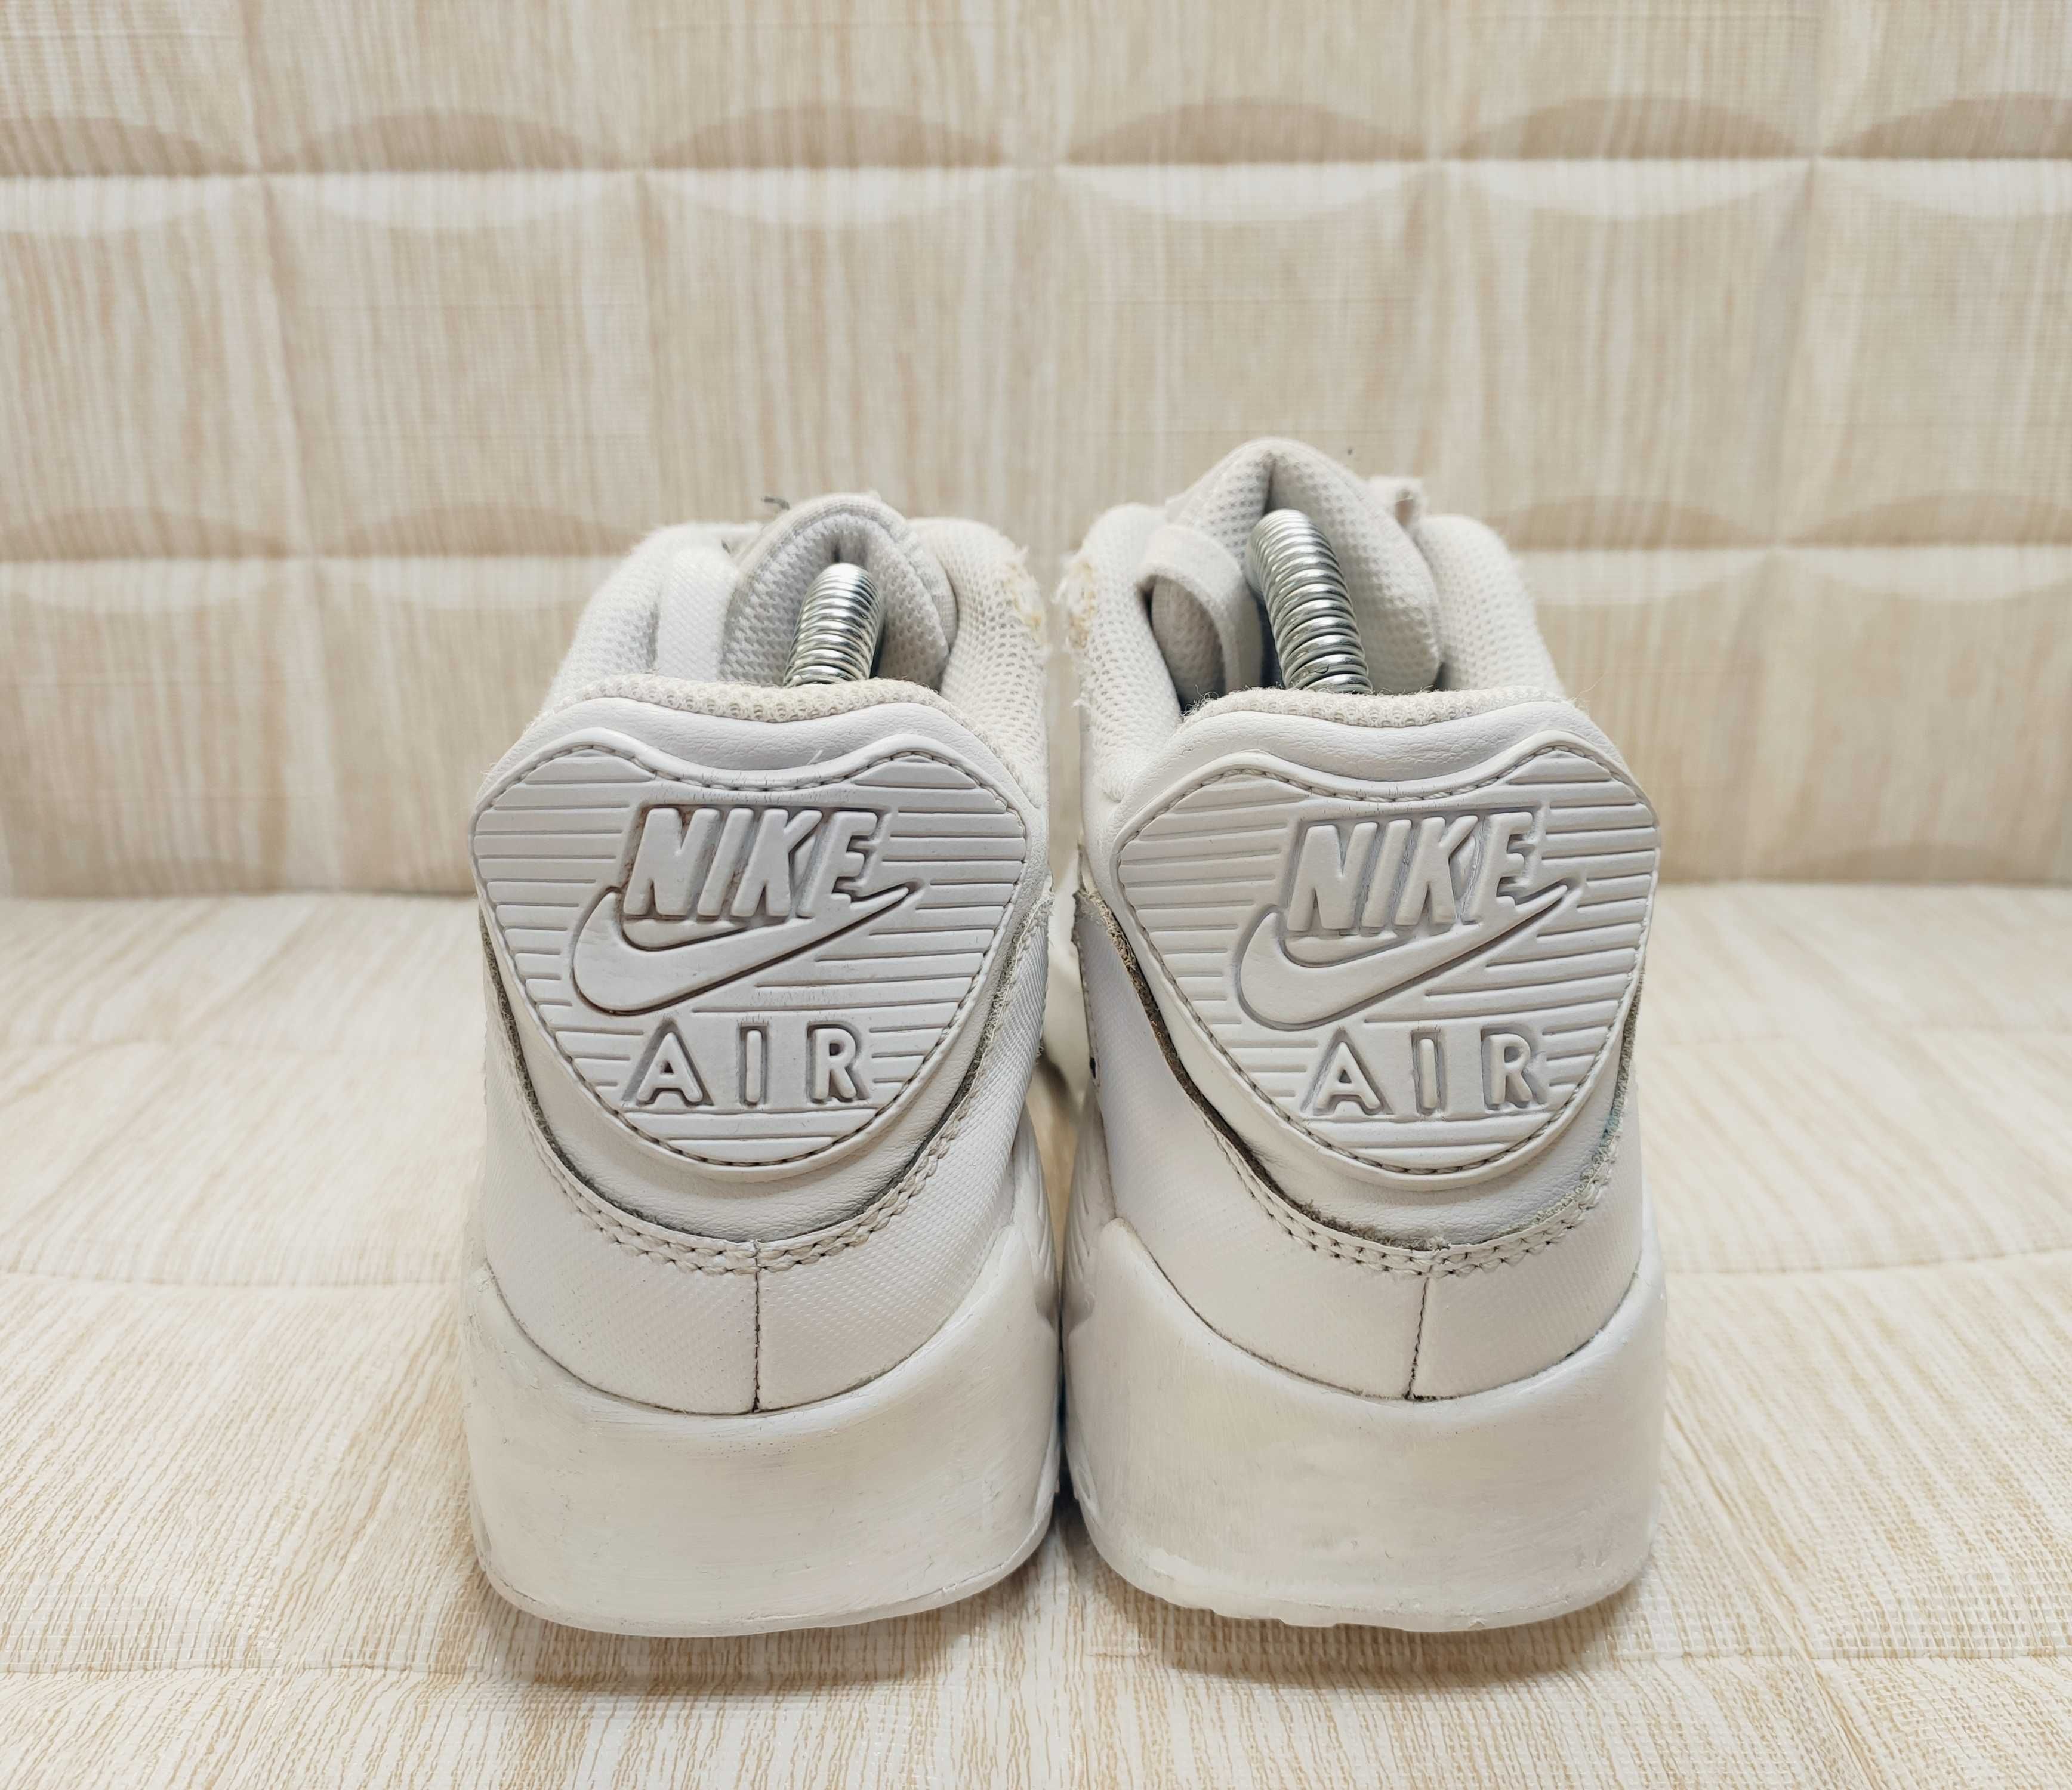 Nike Air Max 90 triple white, rozmiar 38.5, stan dobry